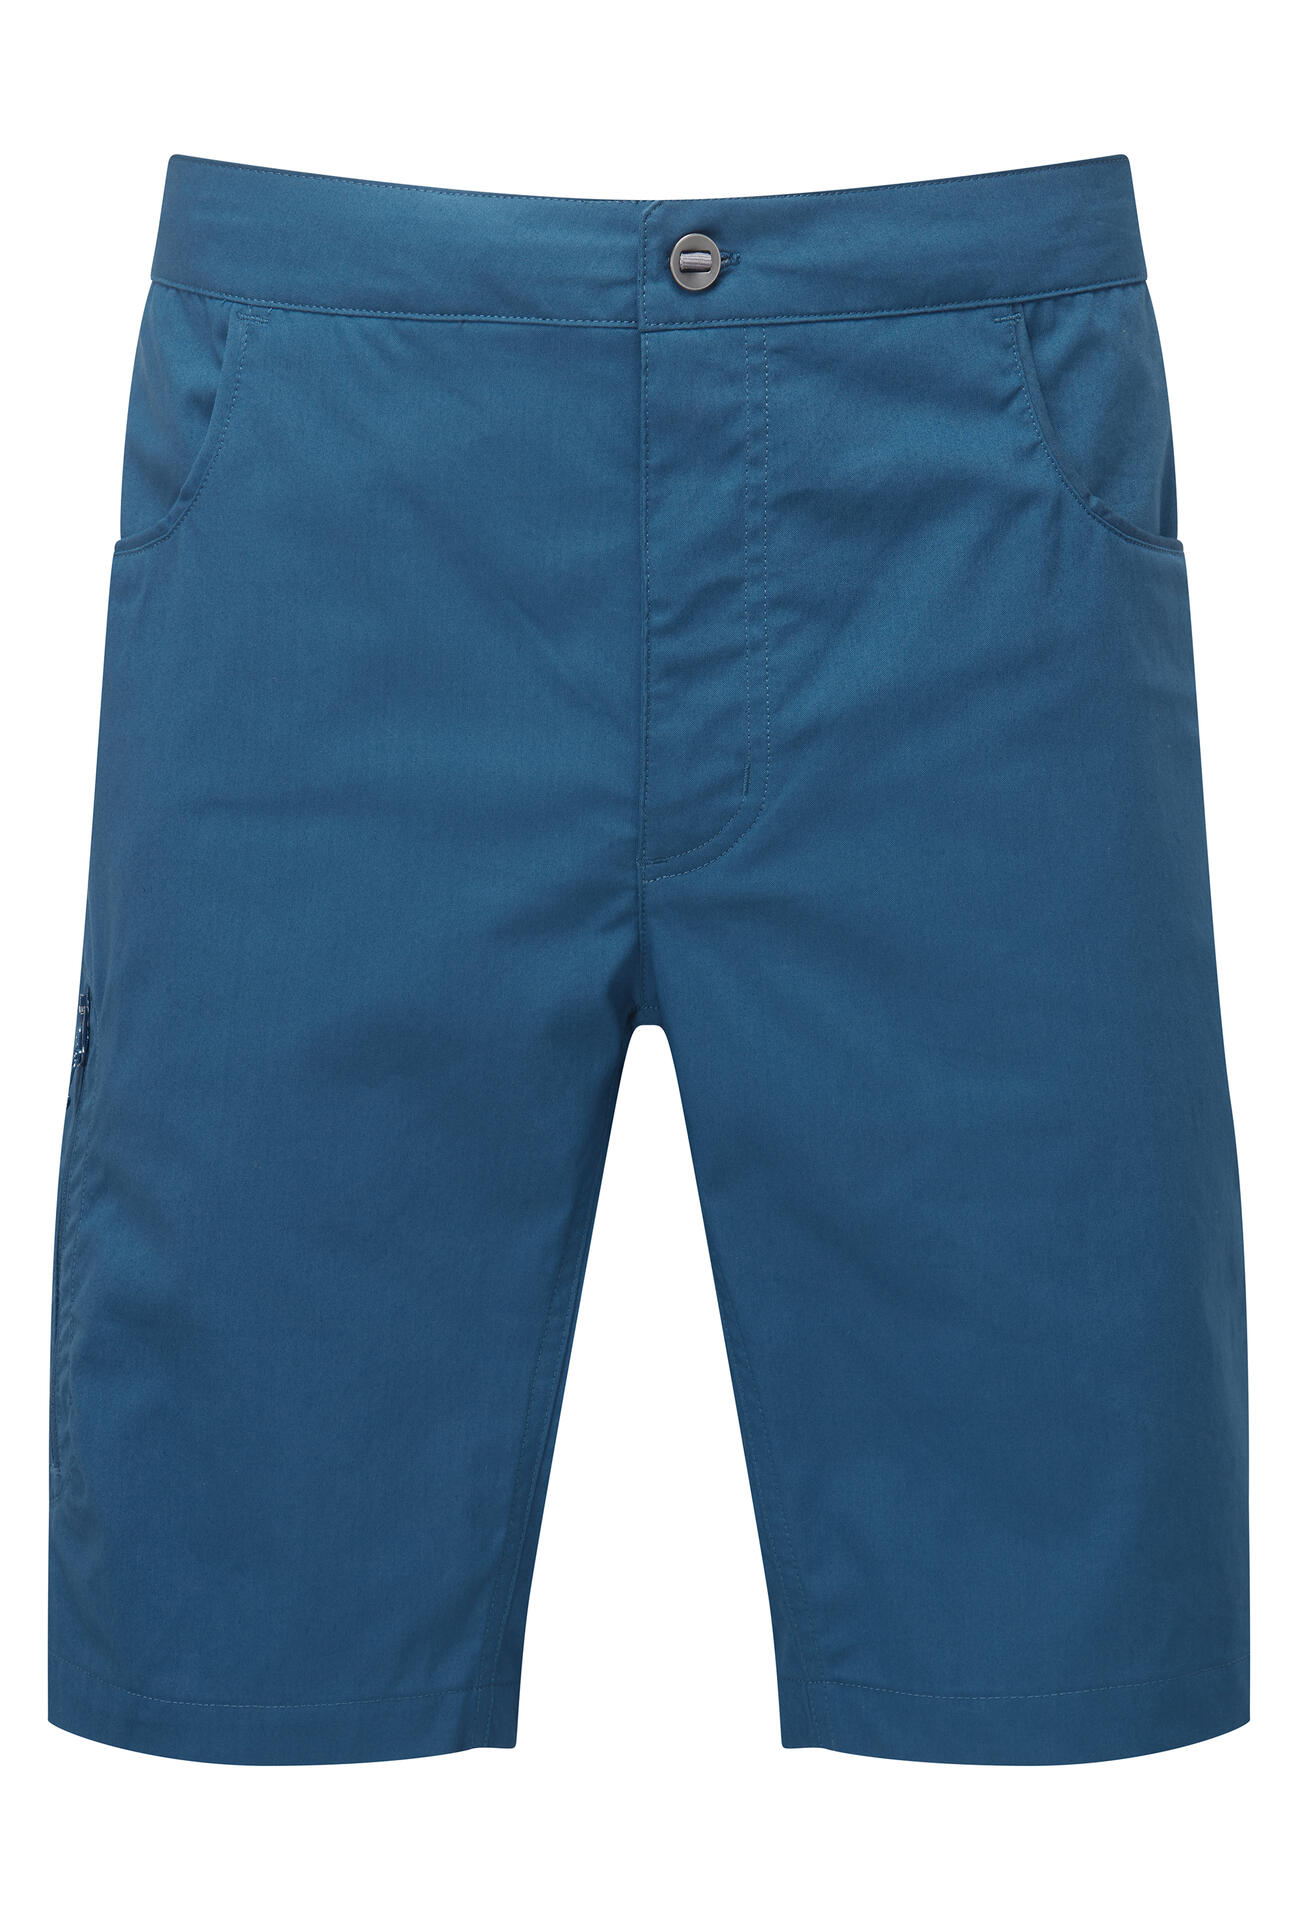 Mountain Equipment Anvil Short Men'S Barva: Majolica Blue, Velikost: L